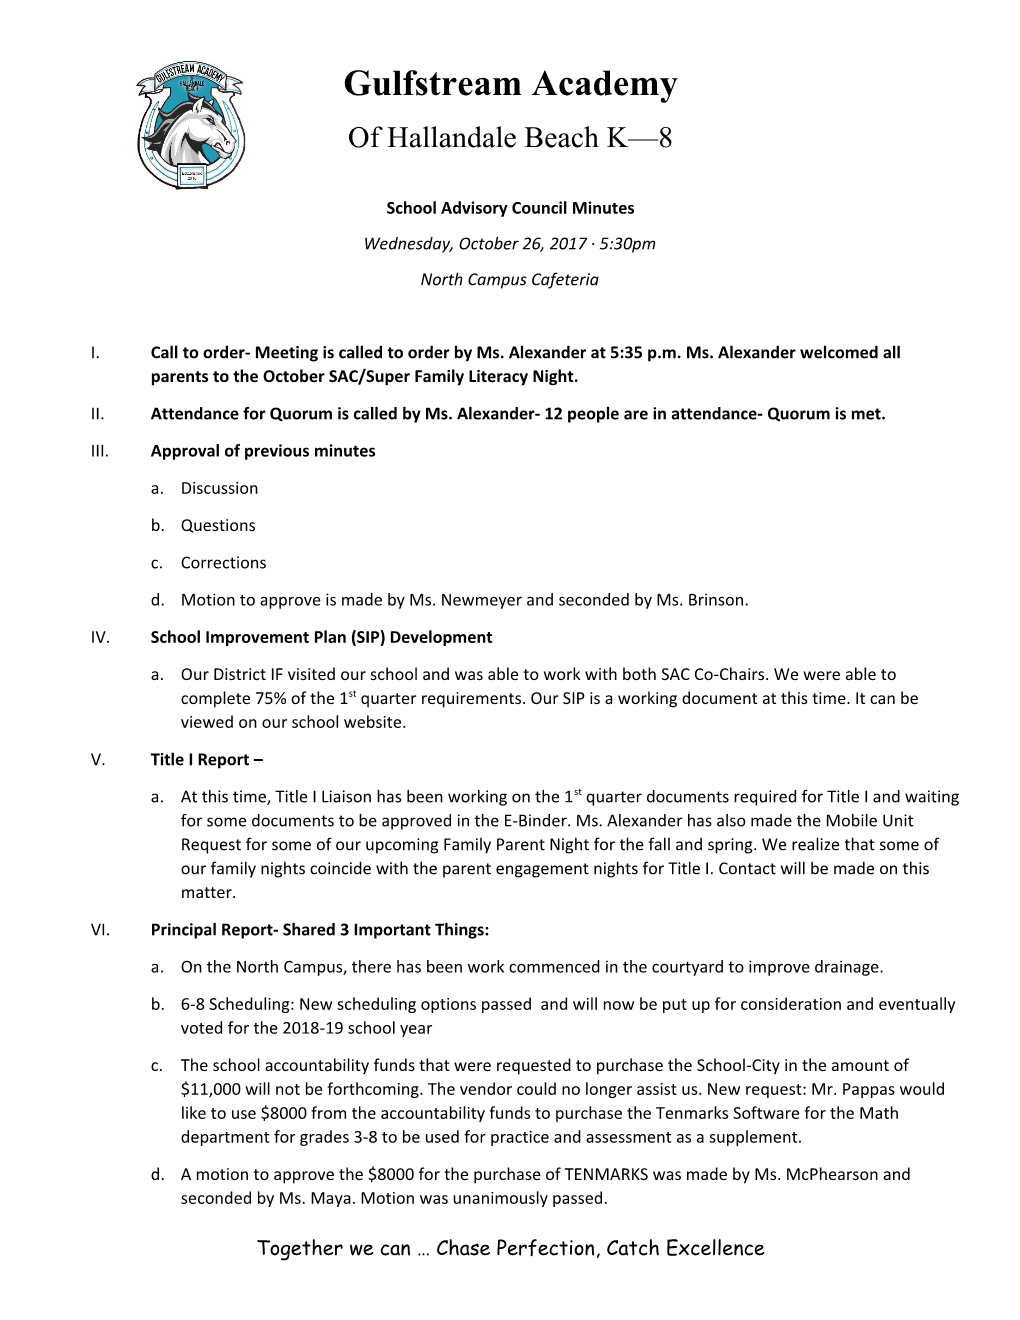 School Advisory Council Minutes